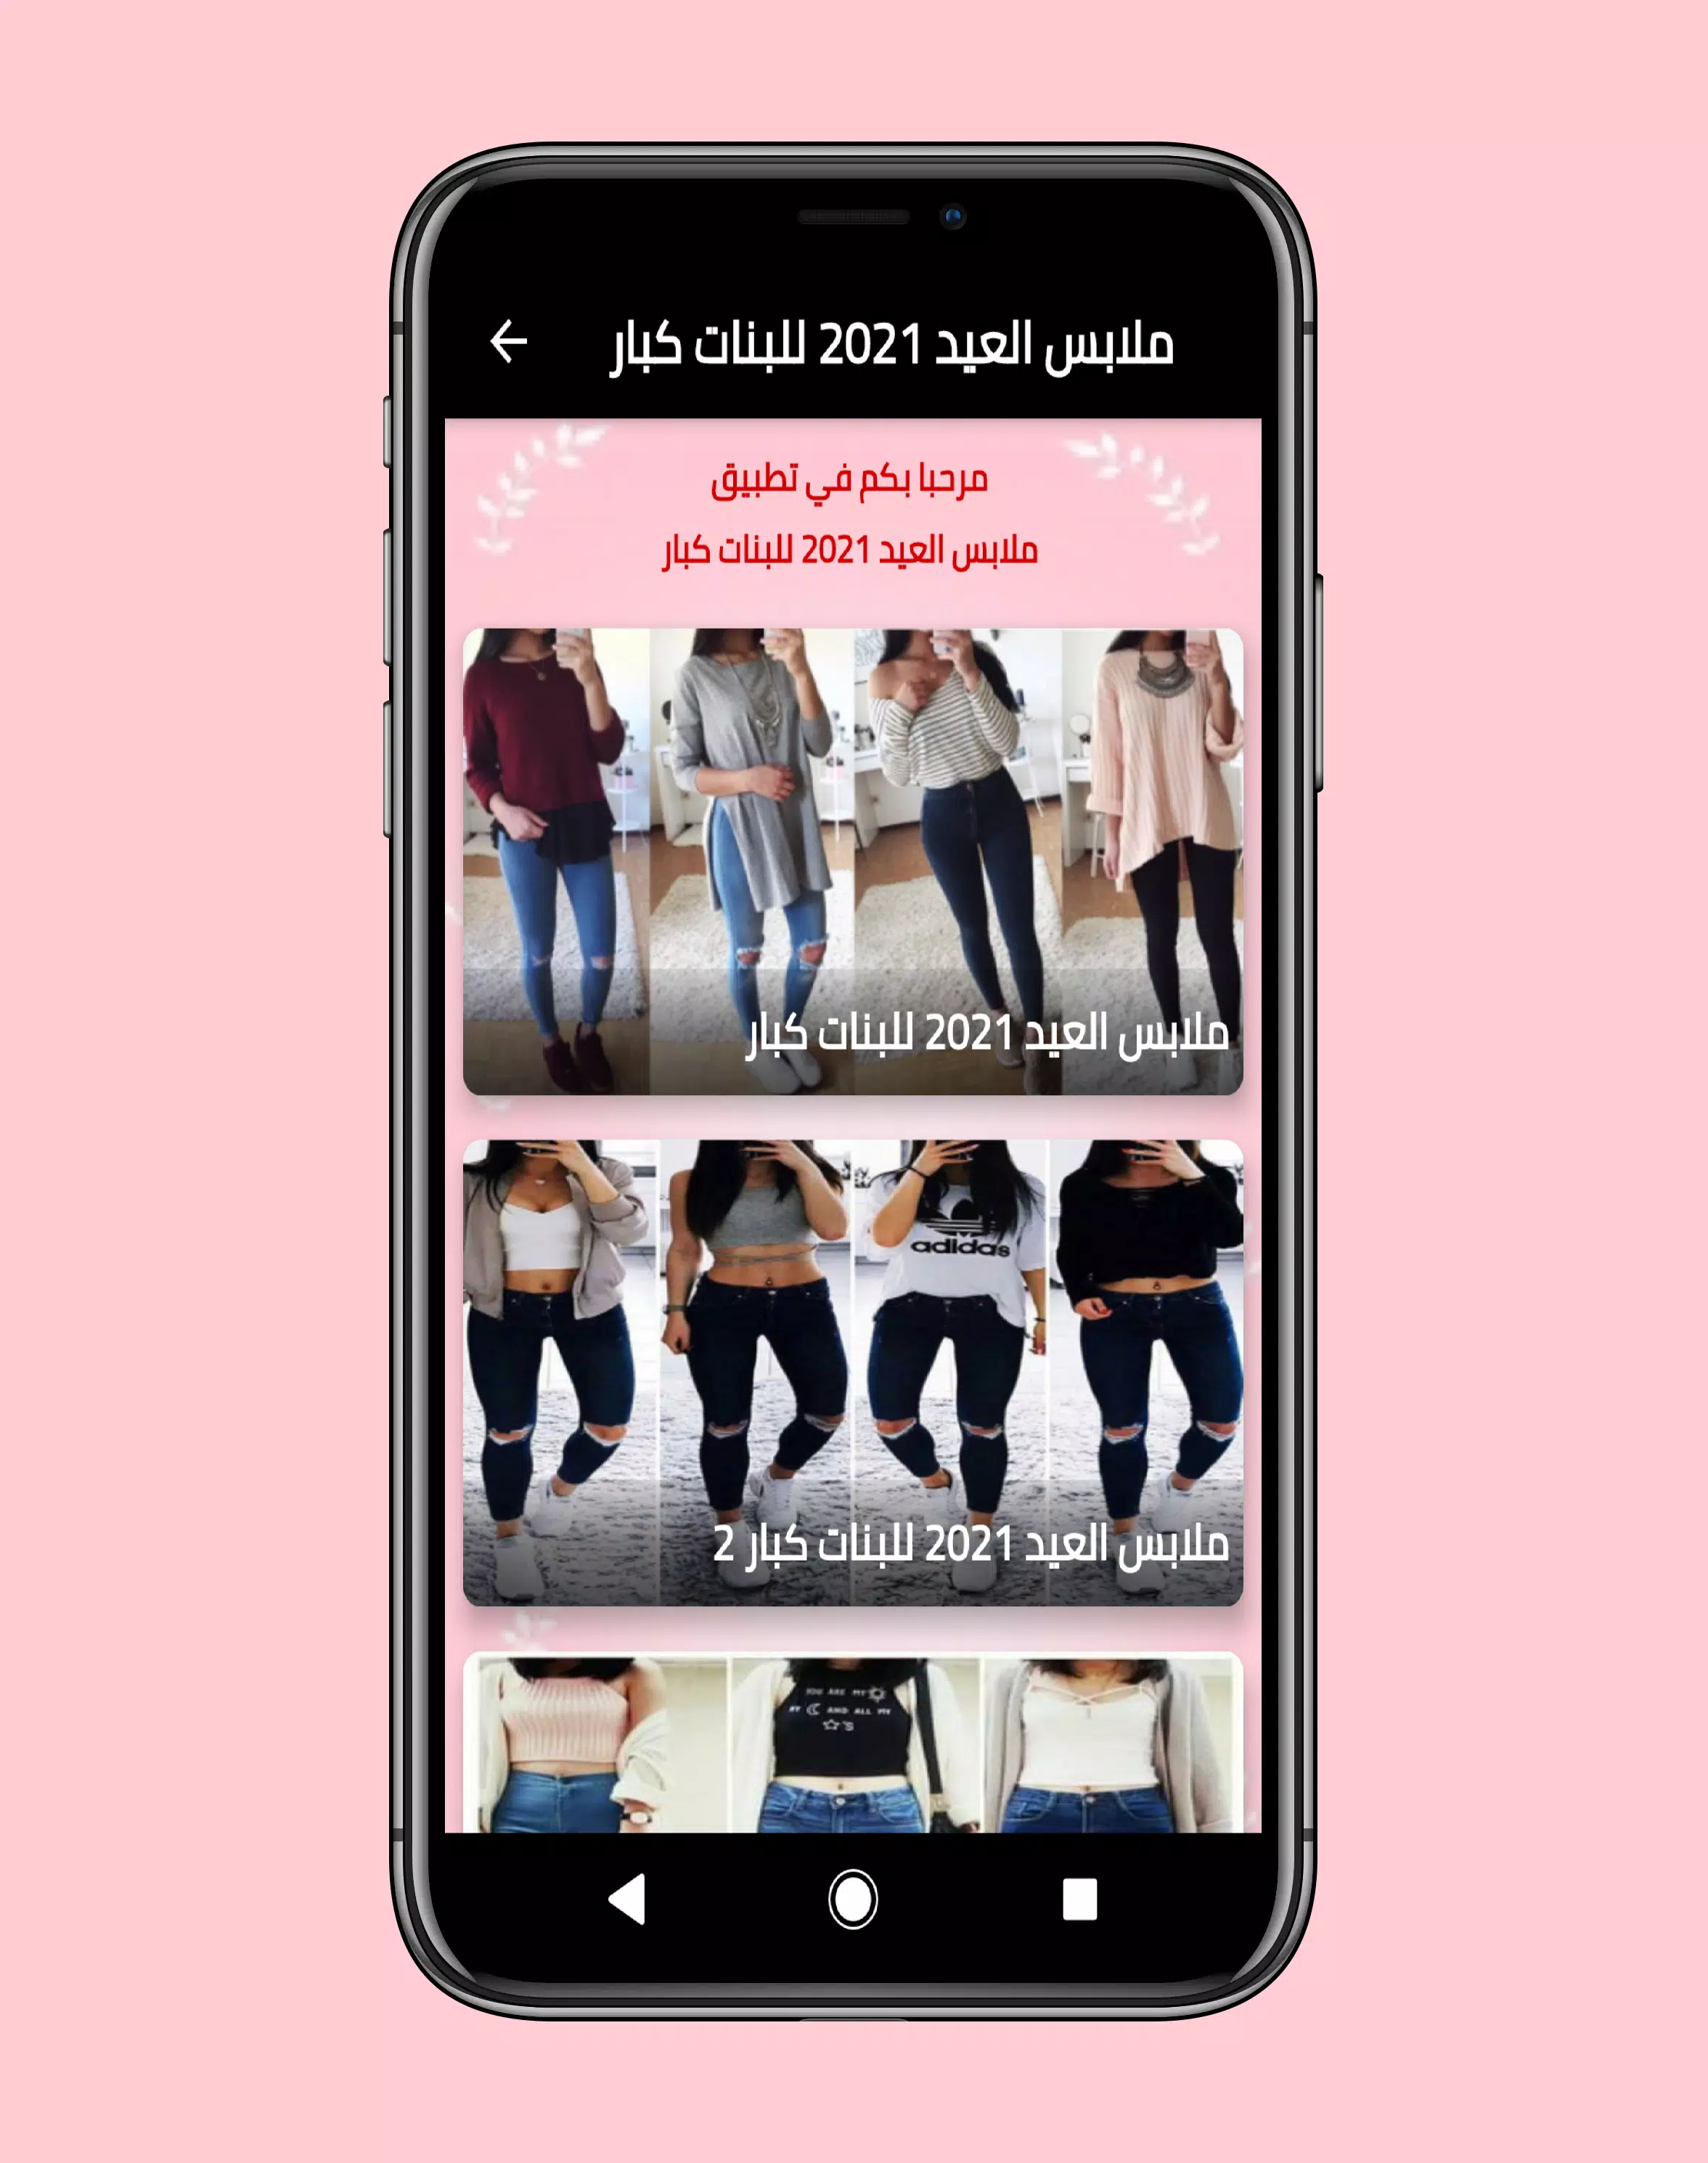 Download do APK de ملابس العيد 2021 للبنات كبار para Android